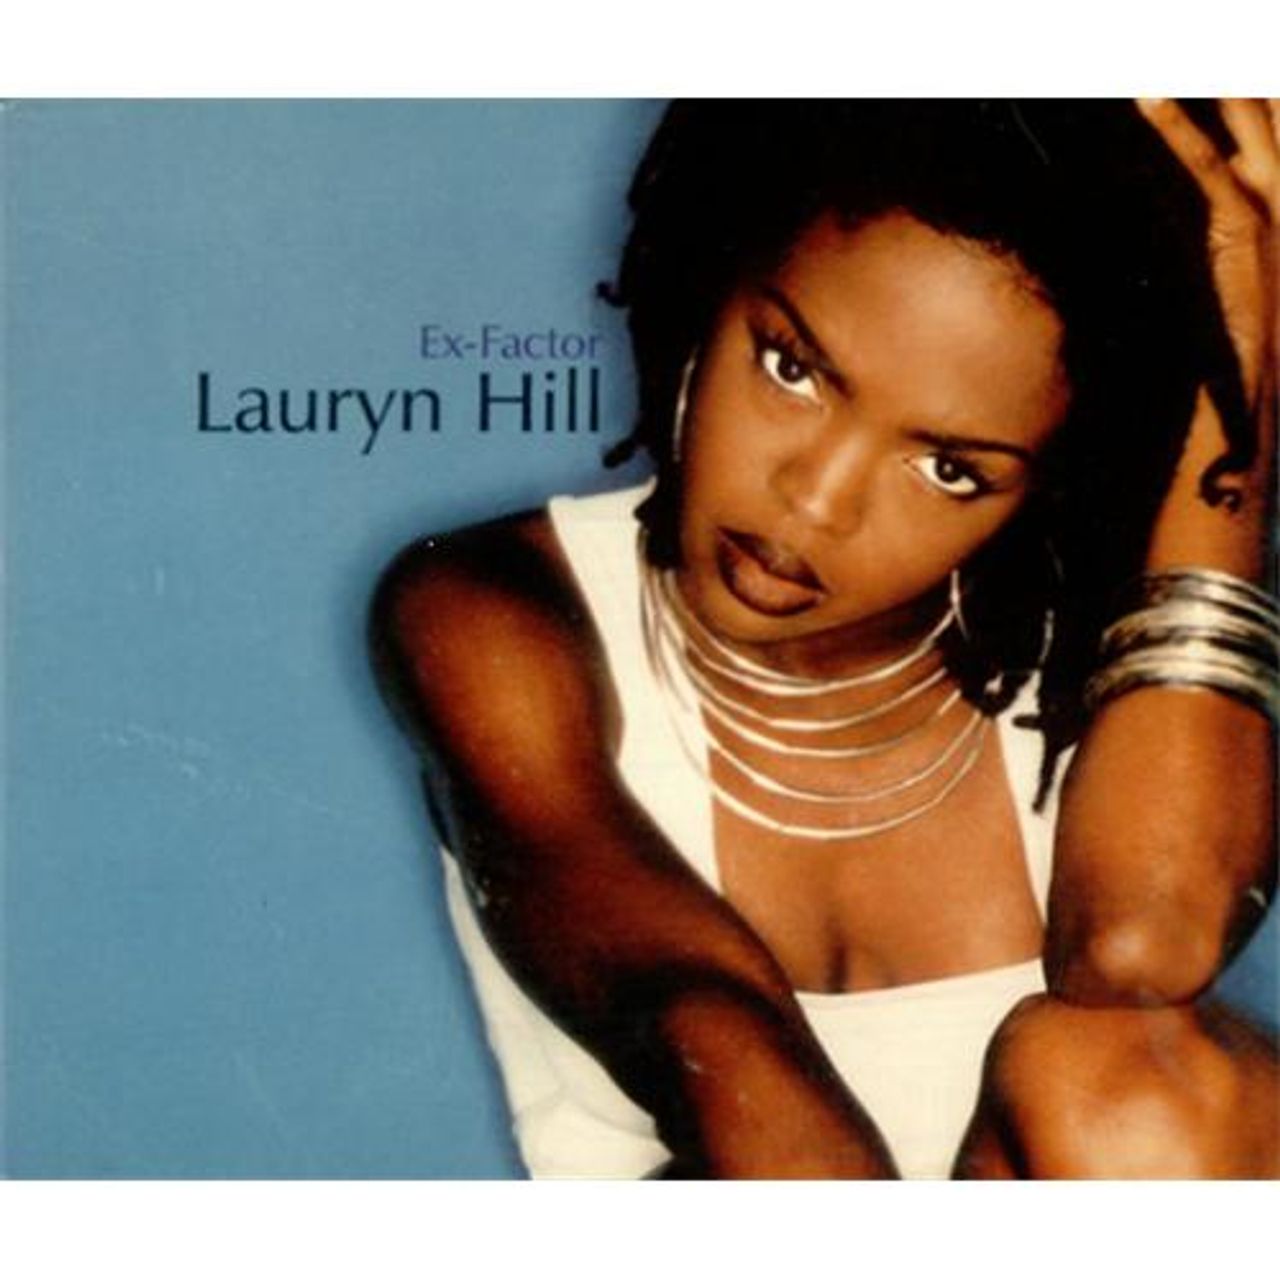 Lauryn Hill Ex-Factor UK 2-CD single set